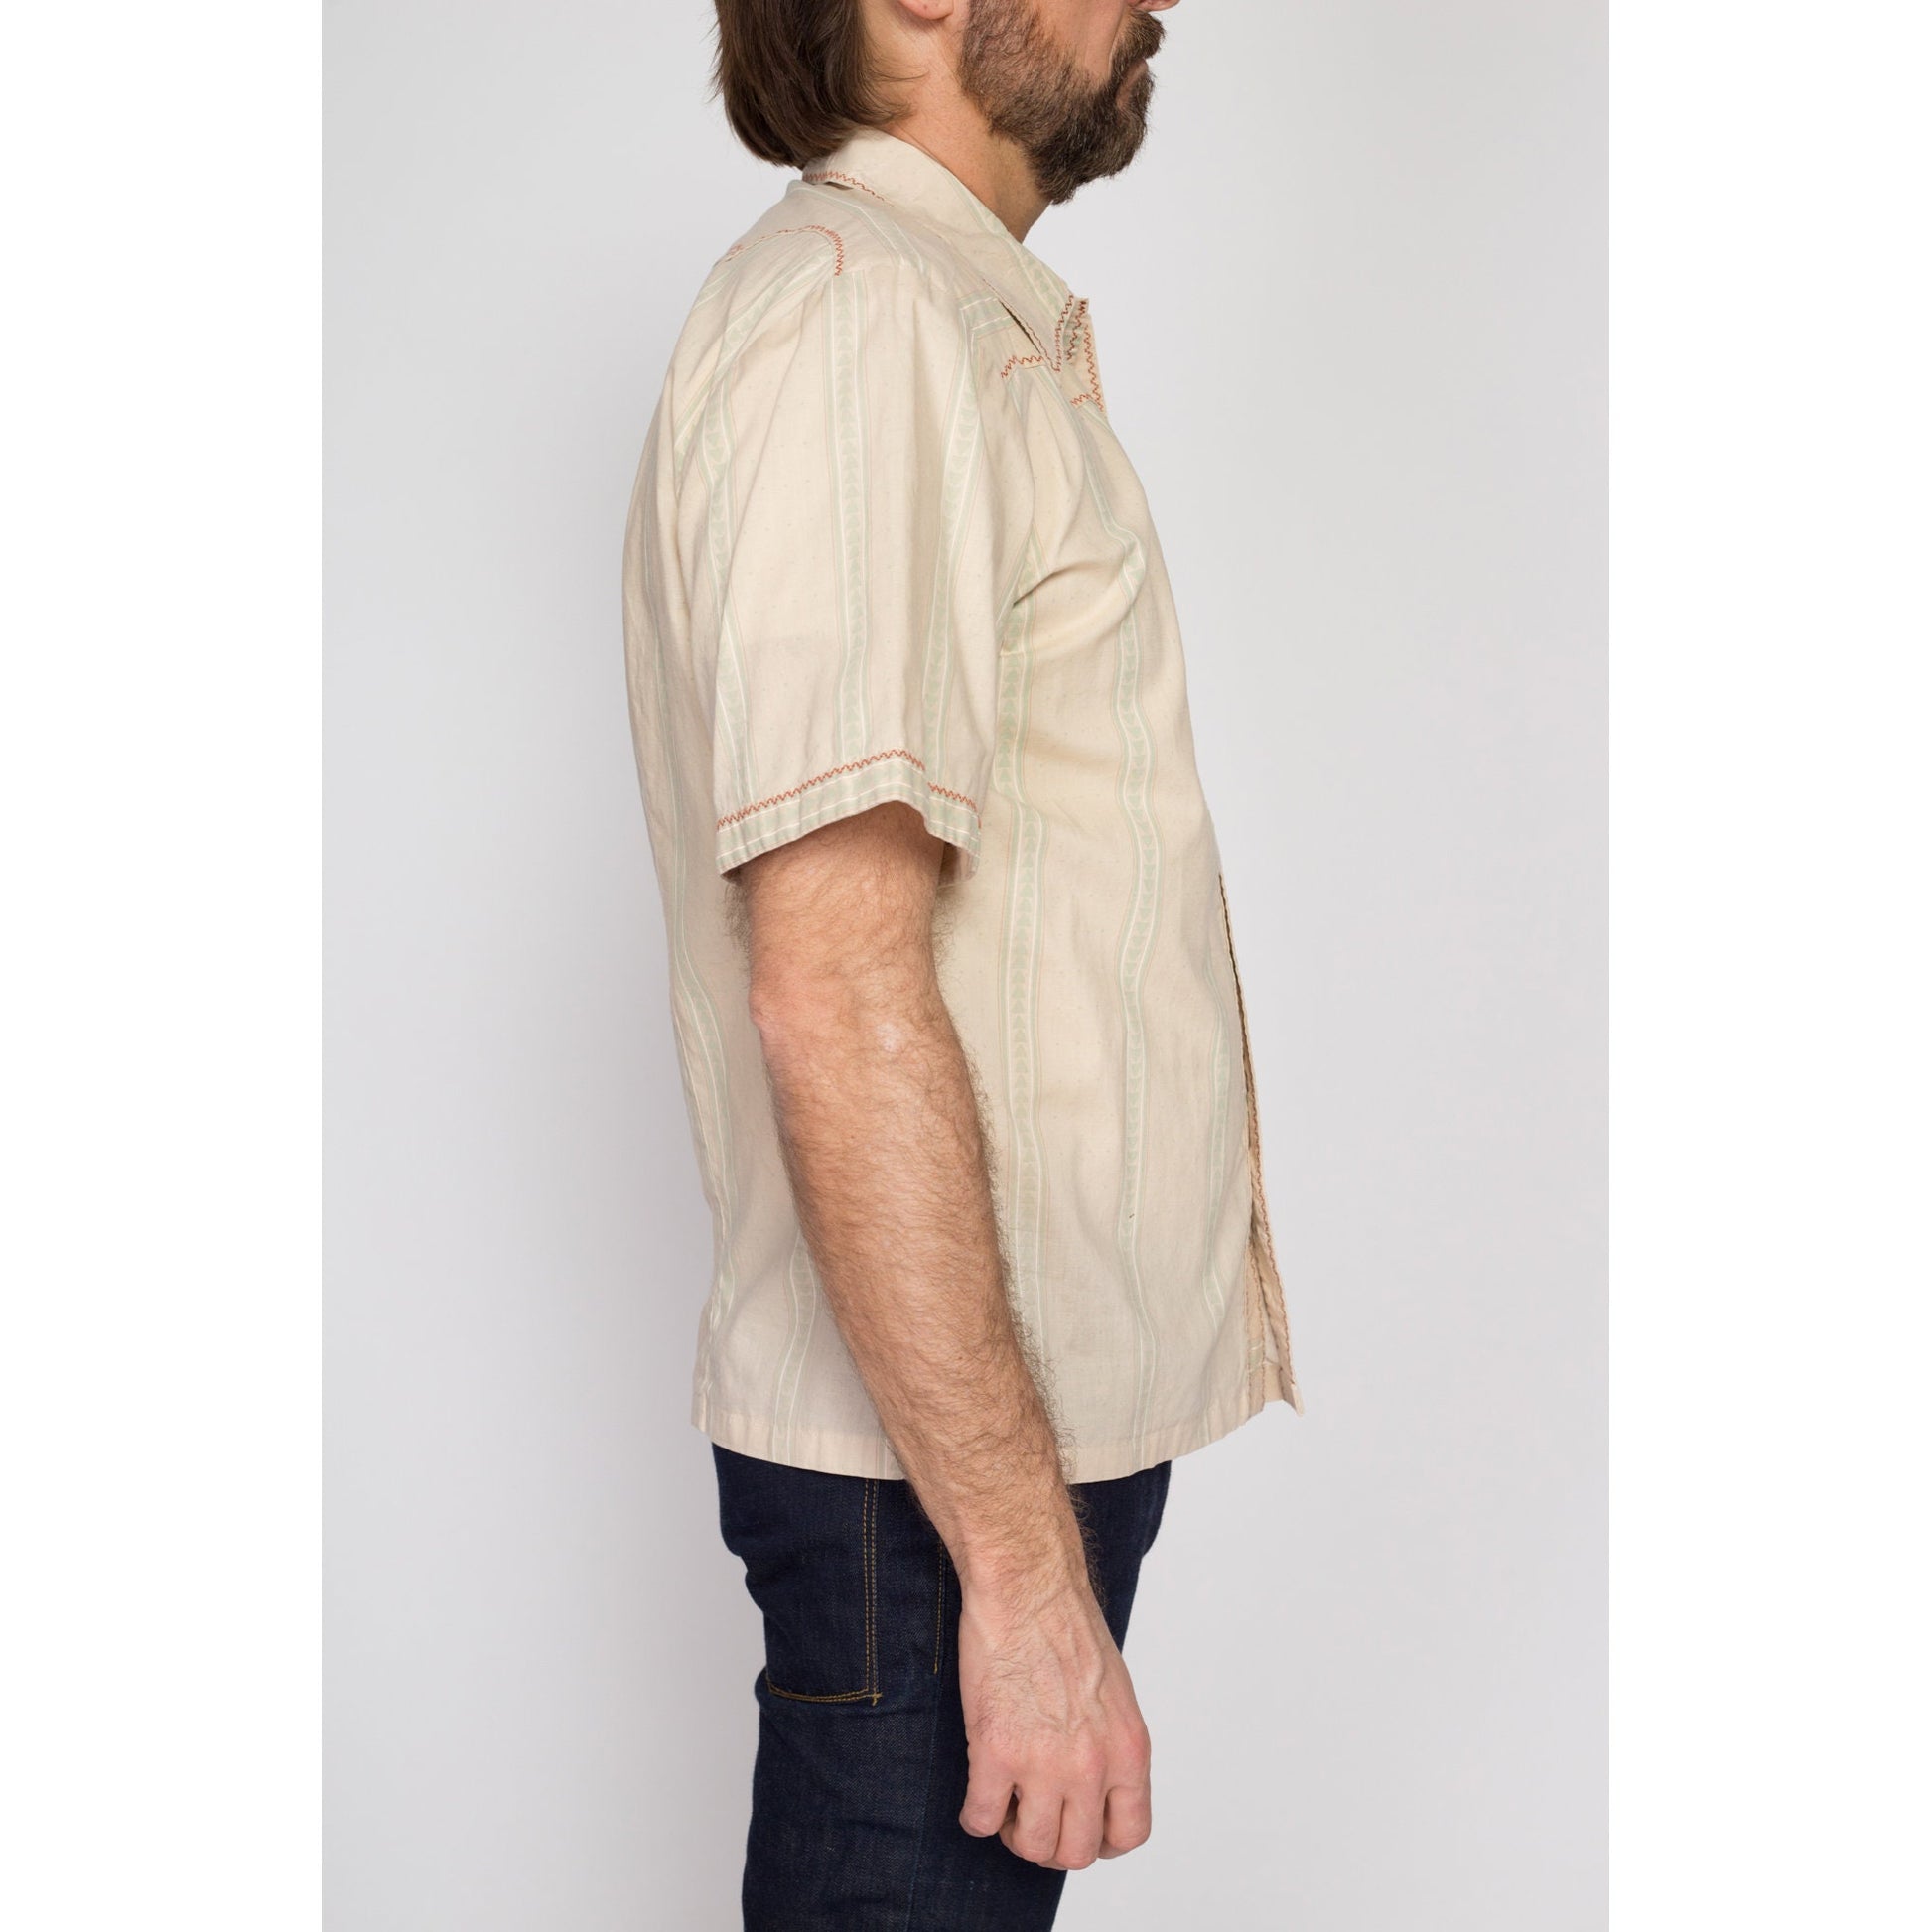 Large 70s Southwestern Striped Pearl Snap Western Shirt | Vintage Beige Short Sleeve Rockabilly Collared Top